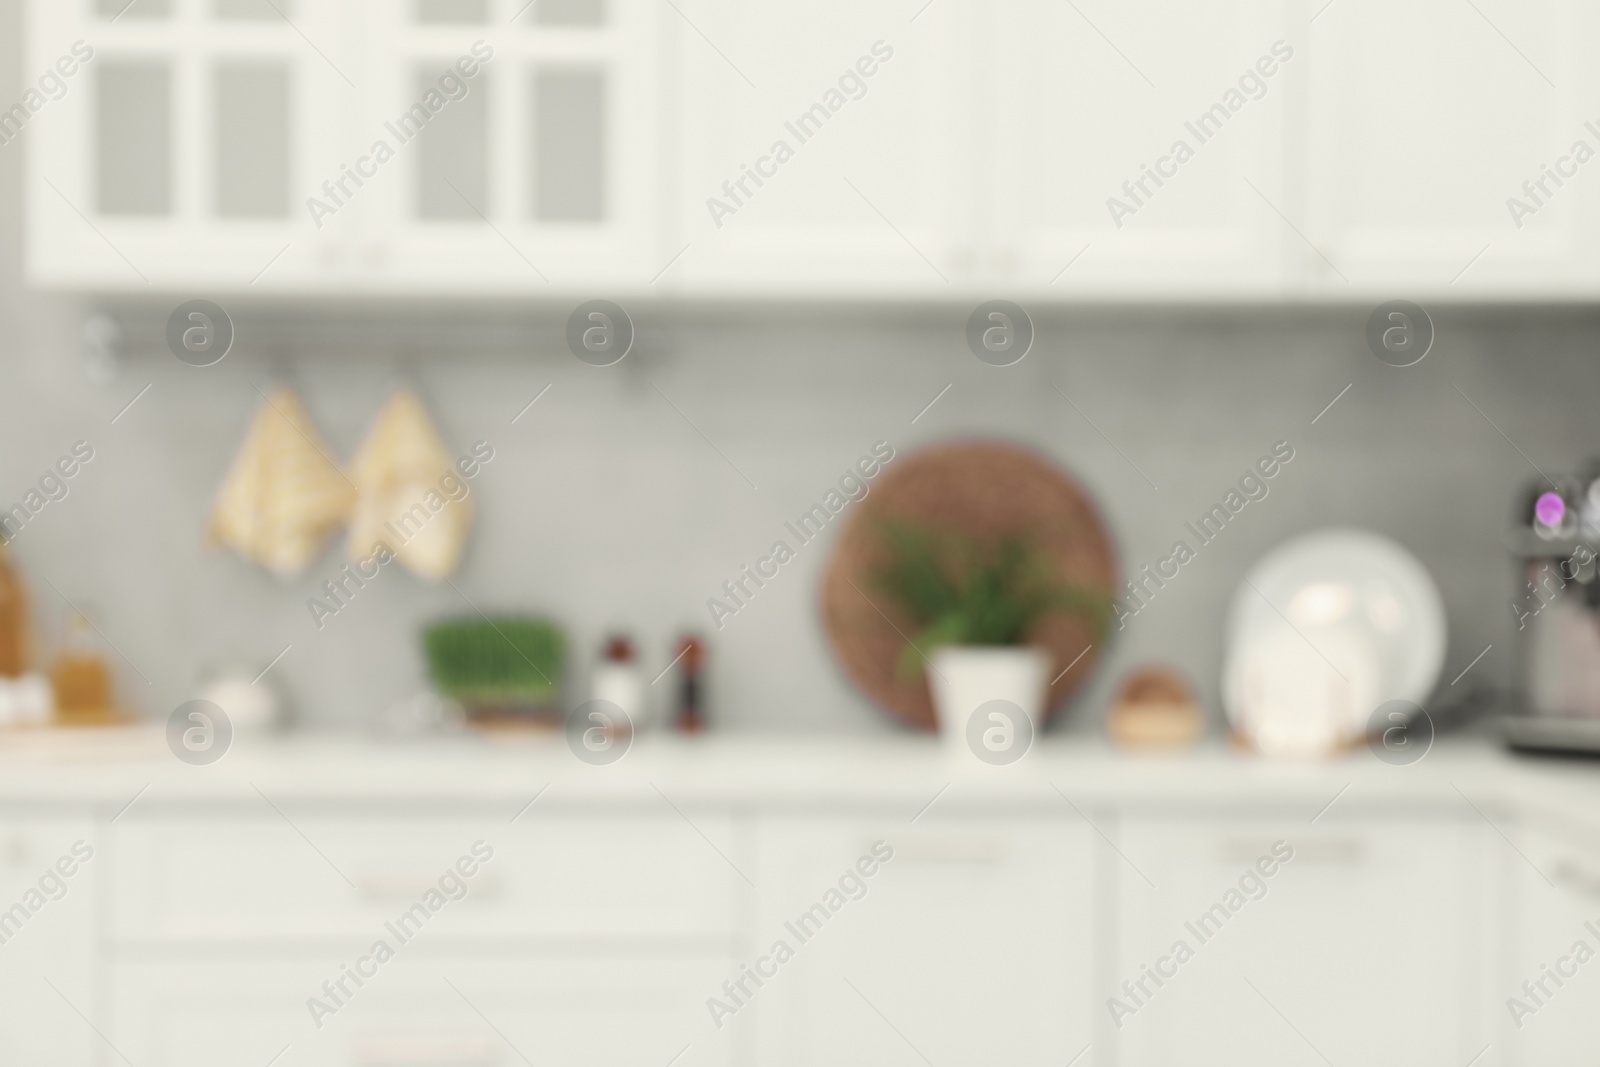 Photo of White cosy kitchen with furniture, blurred view. Interior design